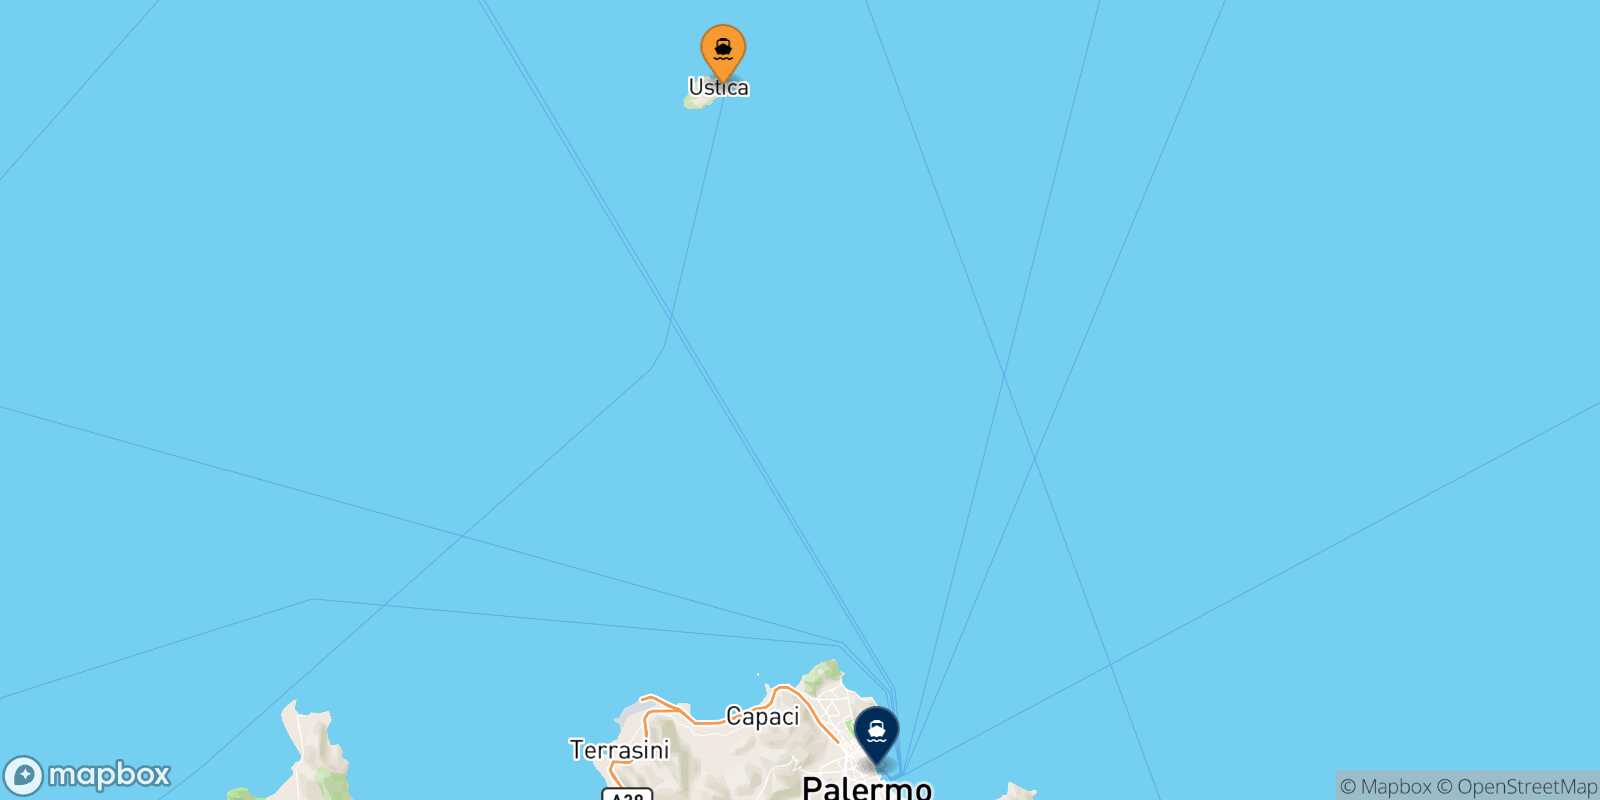 Mapa de la ruta Cala S.maria (Ustica) Palermo